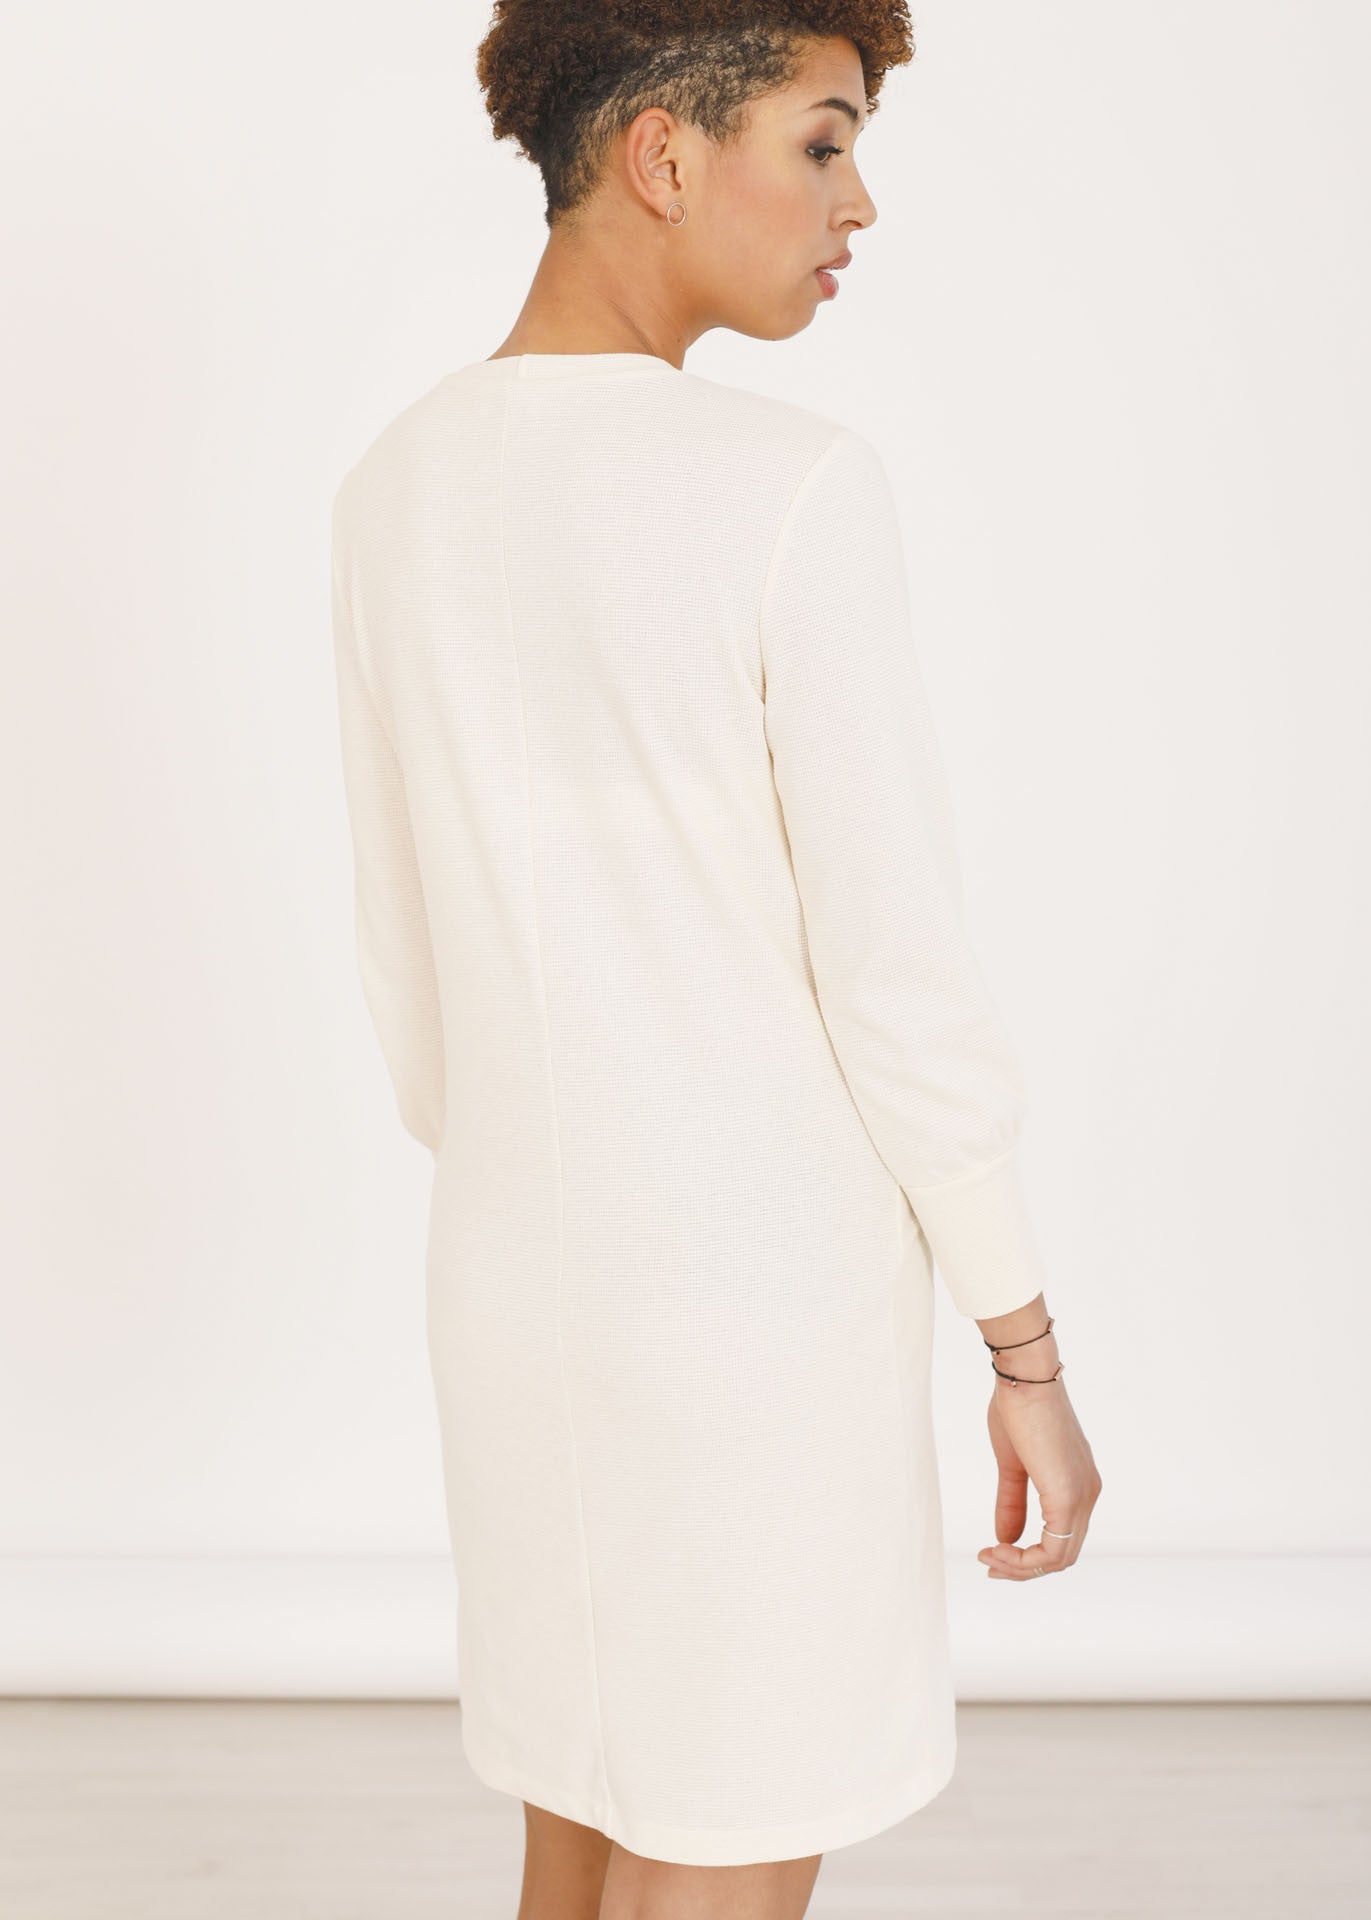 Tana - Sweater Dress in Ivory